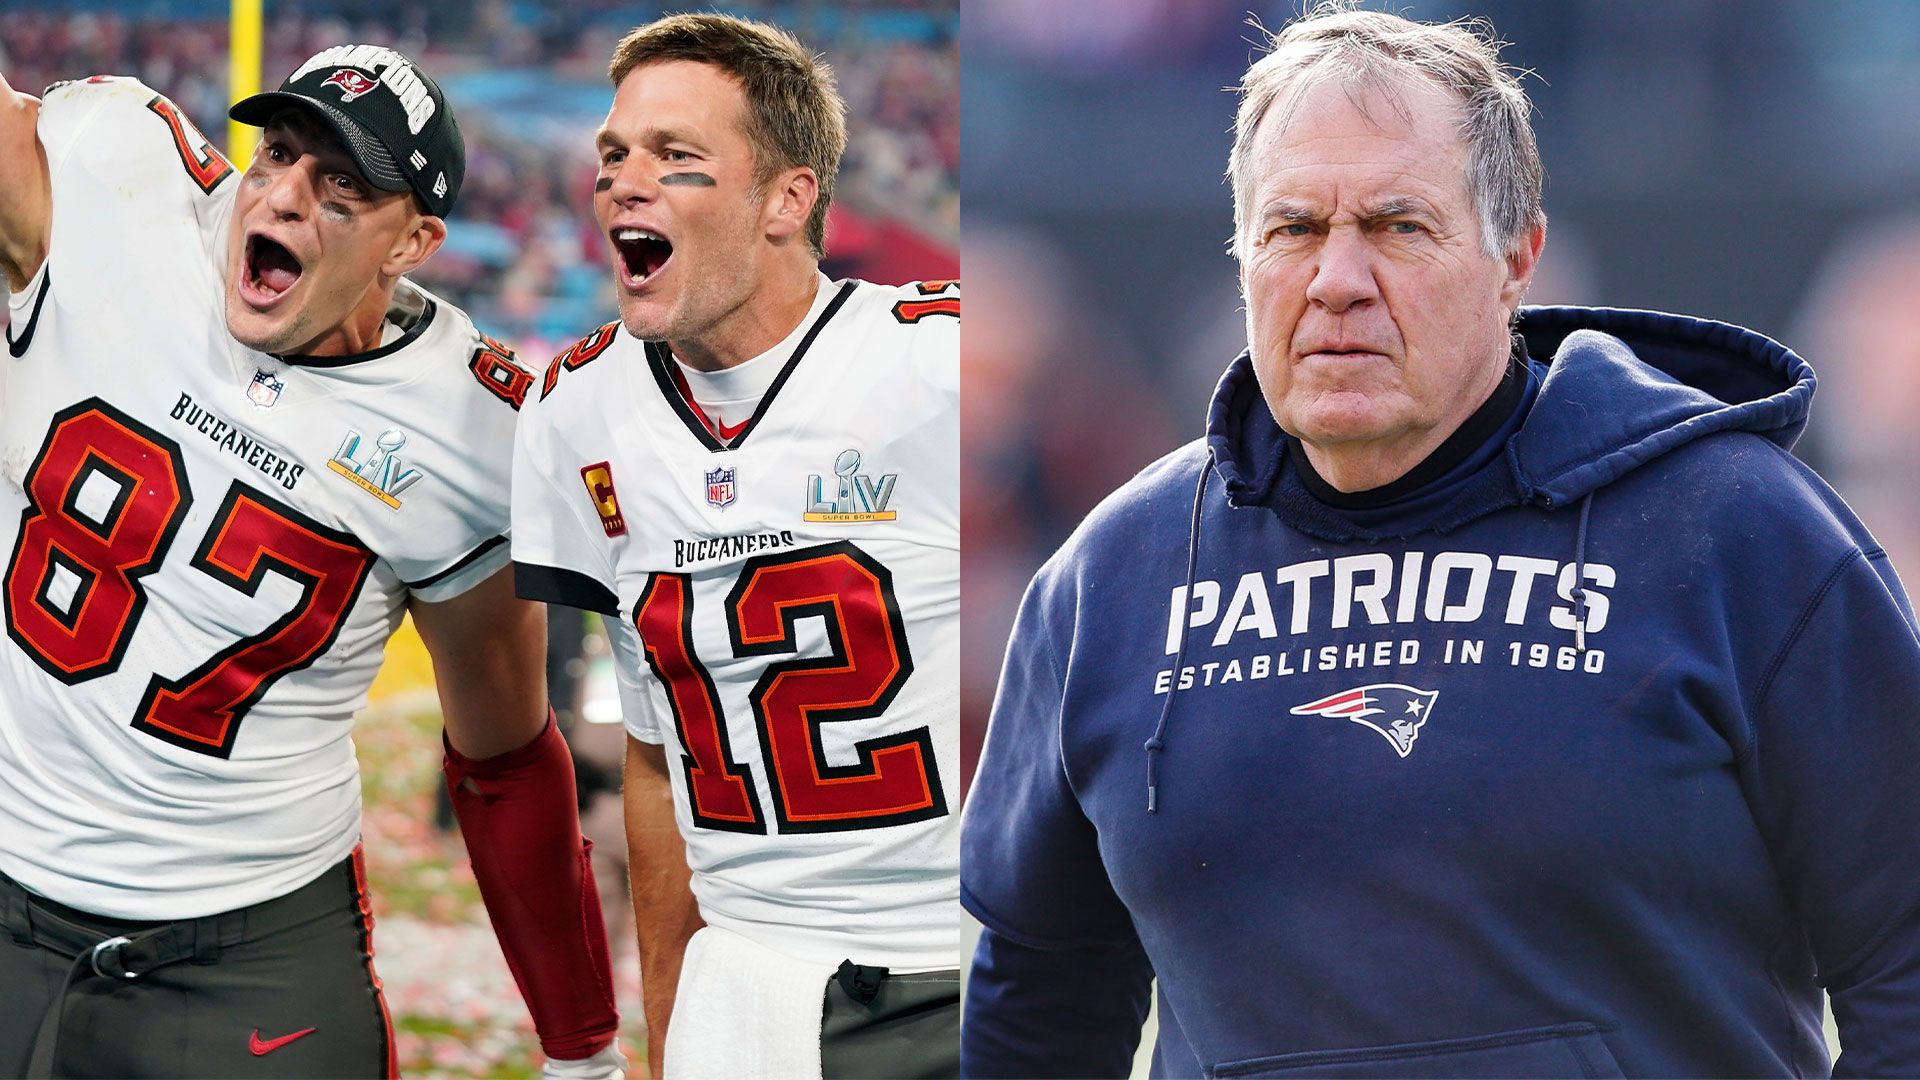 Patriots opponents for 2021 NFL season set, including Tom Brady's Bucs -  Pats Pulpit